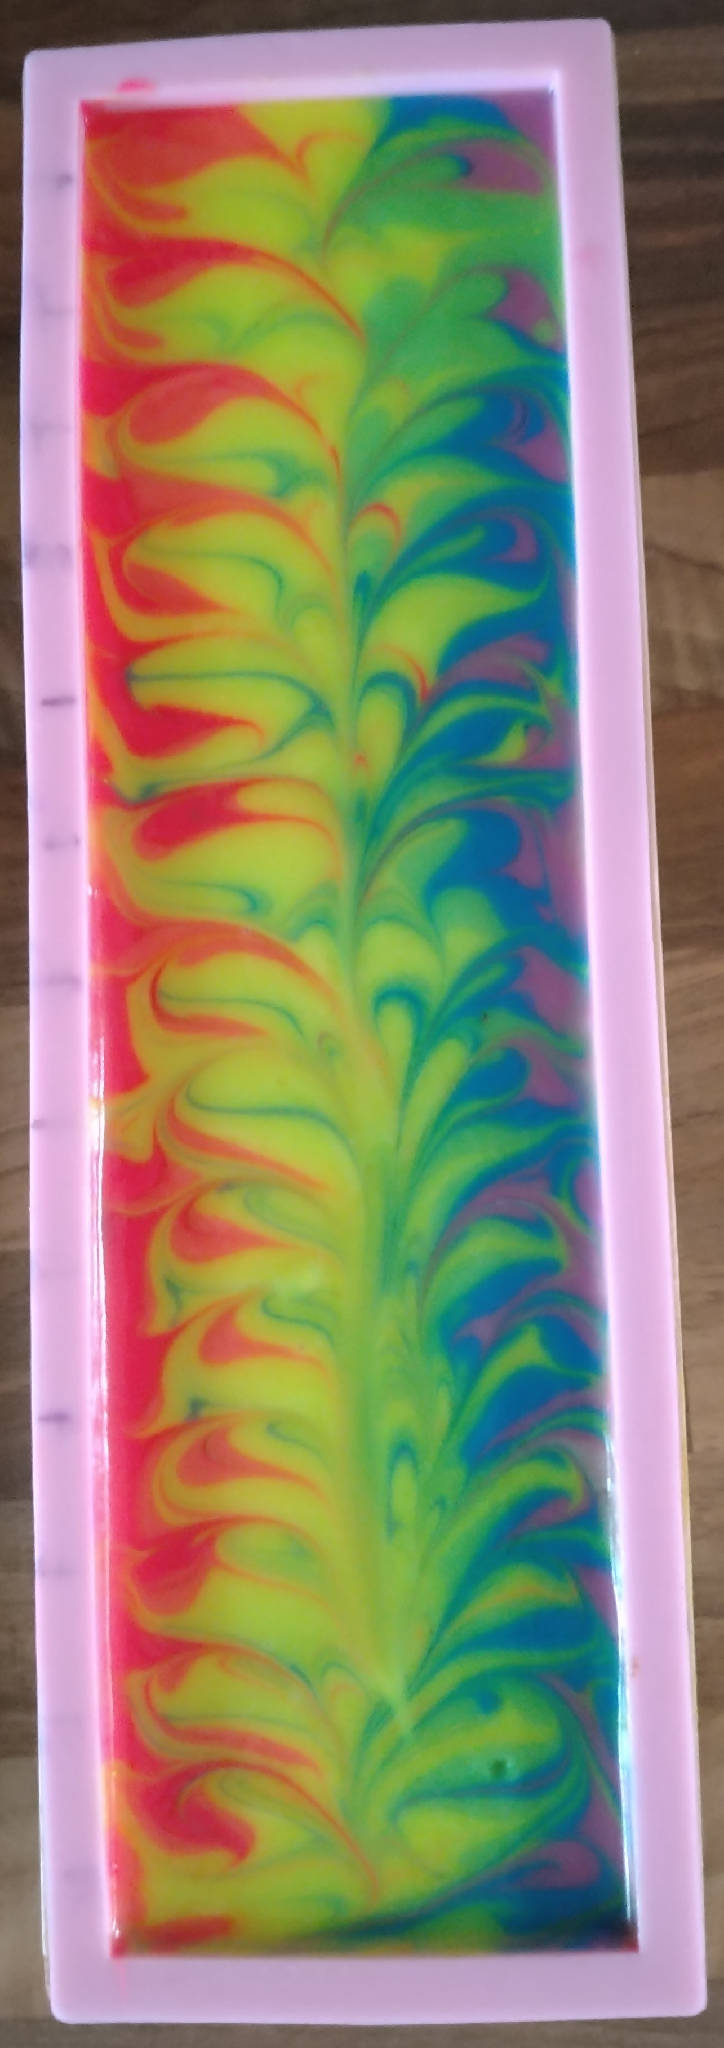 The Midnight Rainbow soap